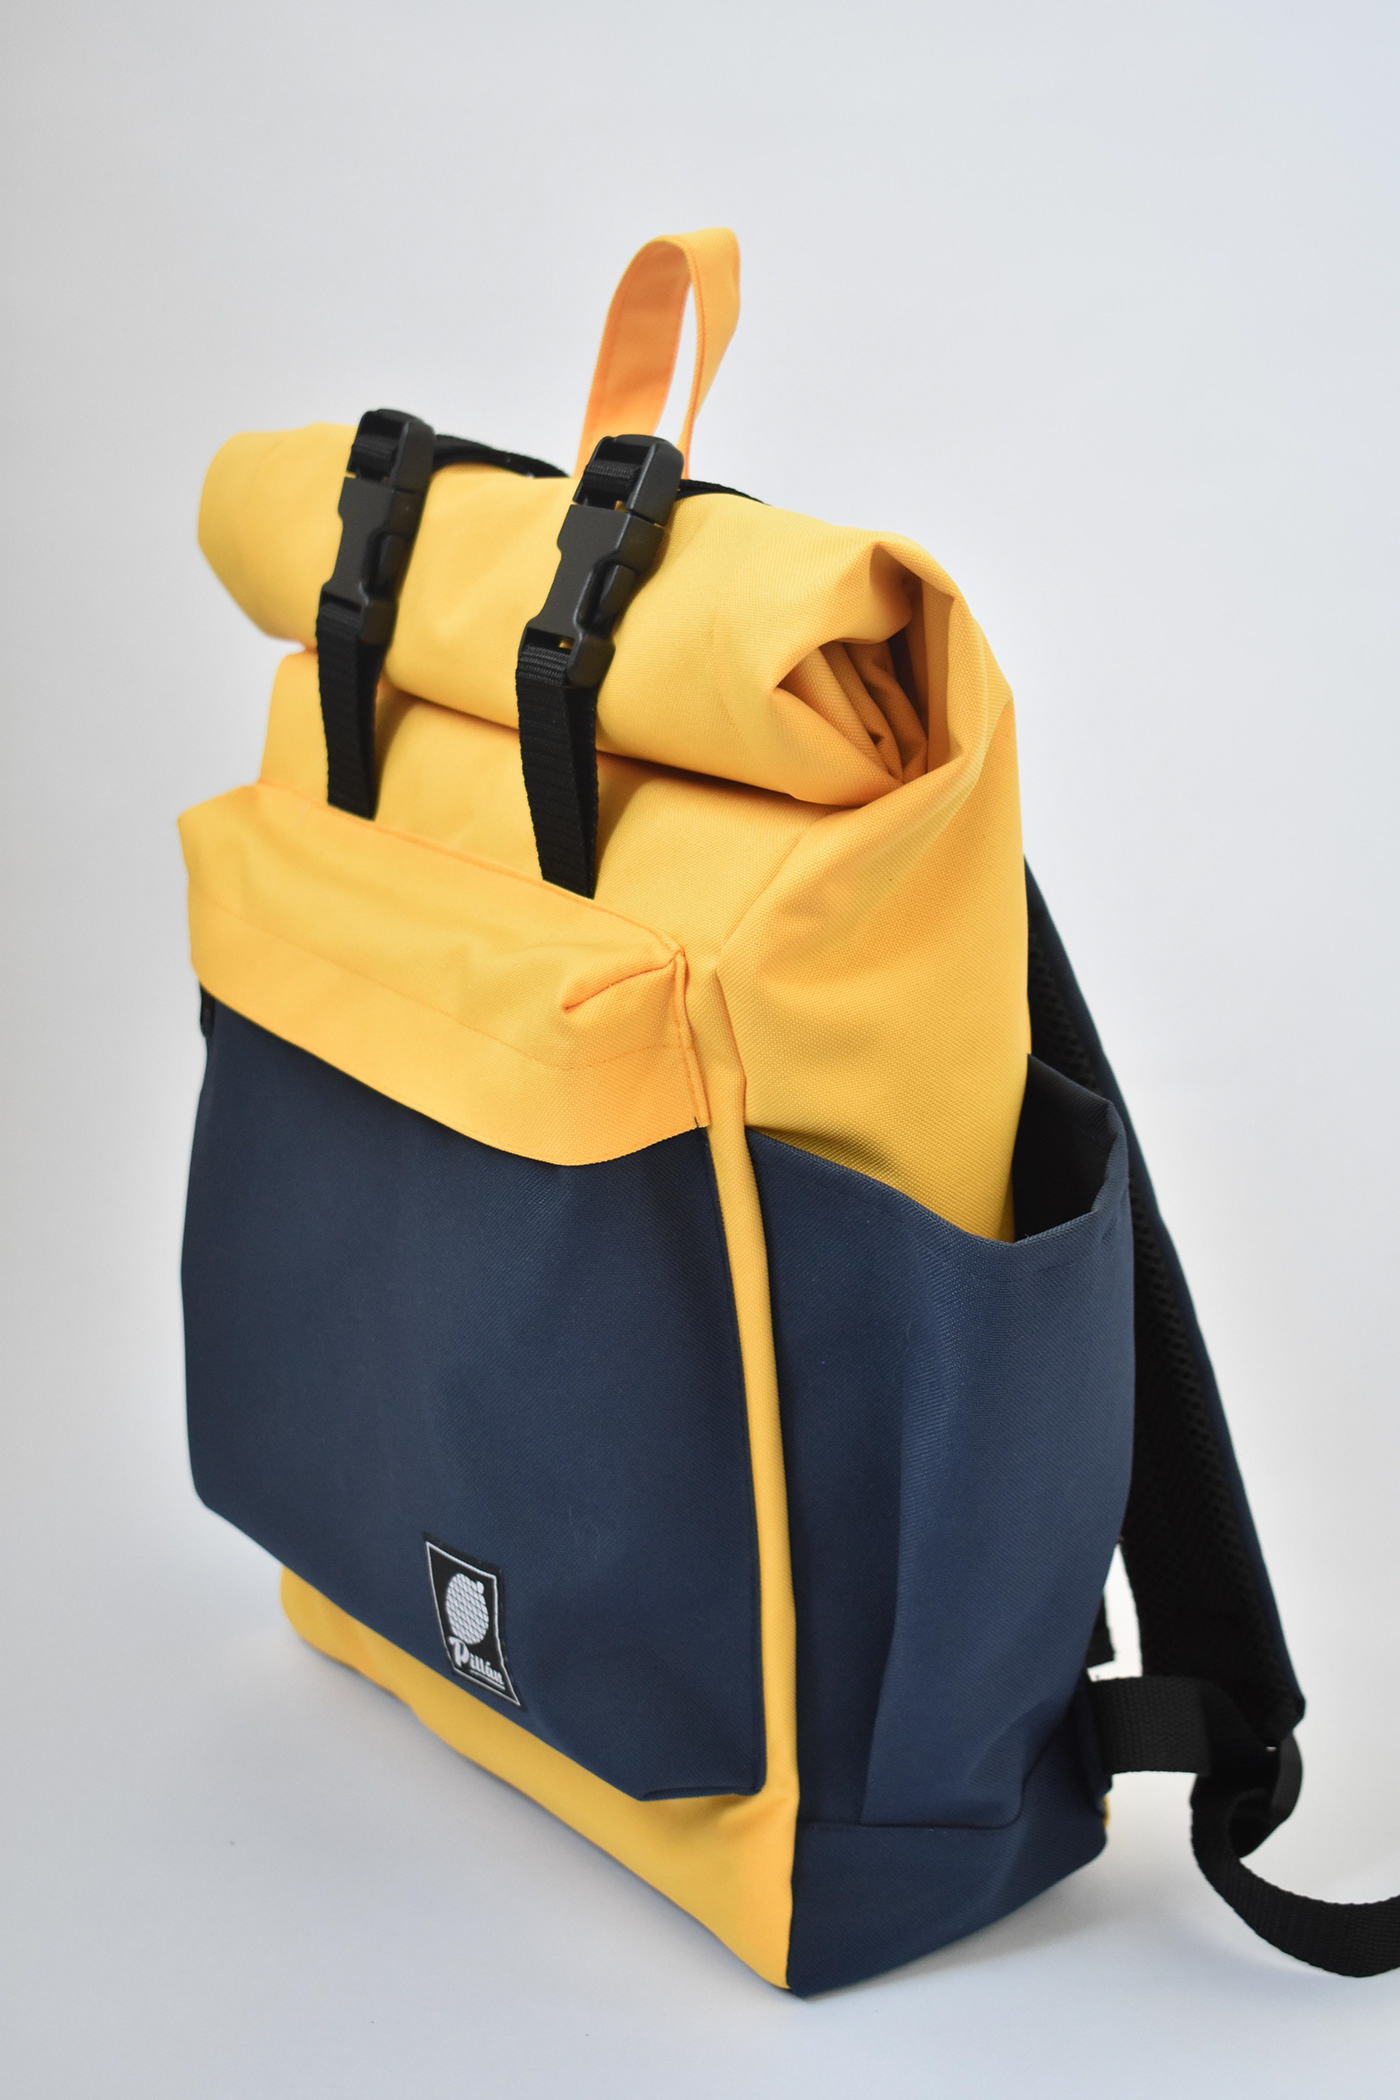 accesorios backpack design diseño mochilas Pillán rolltop